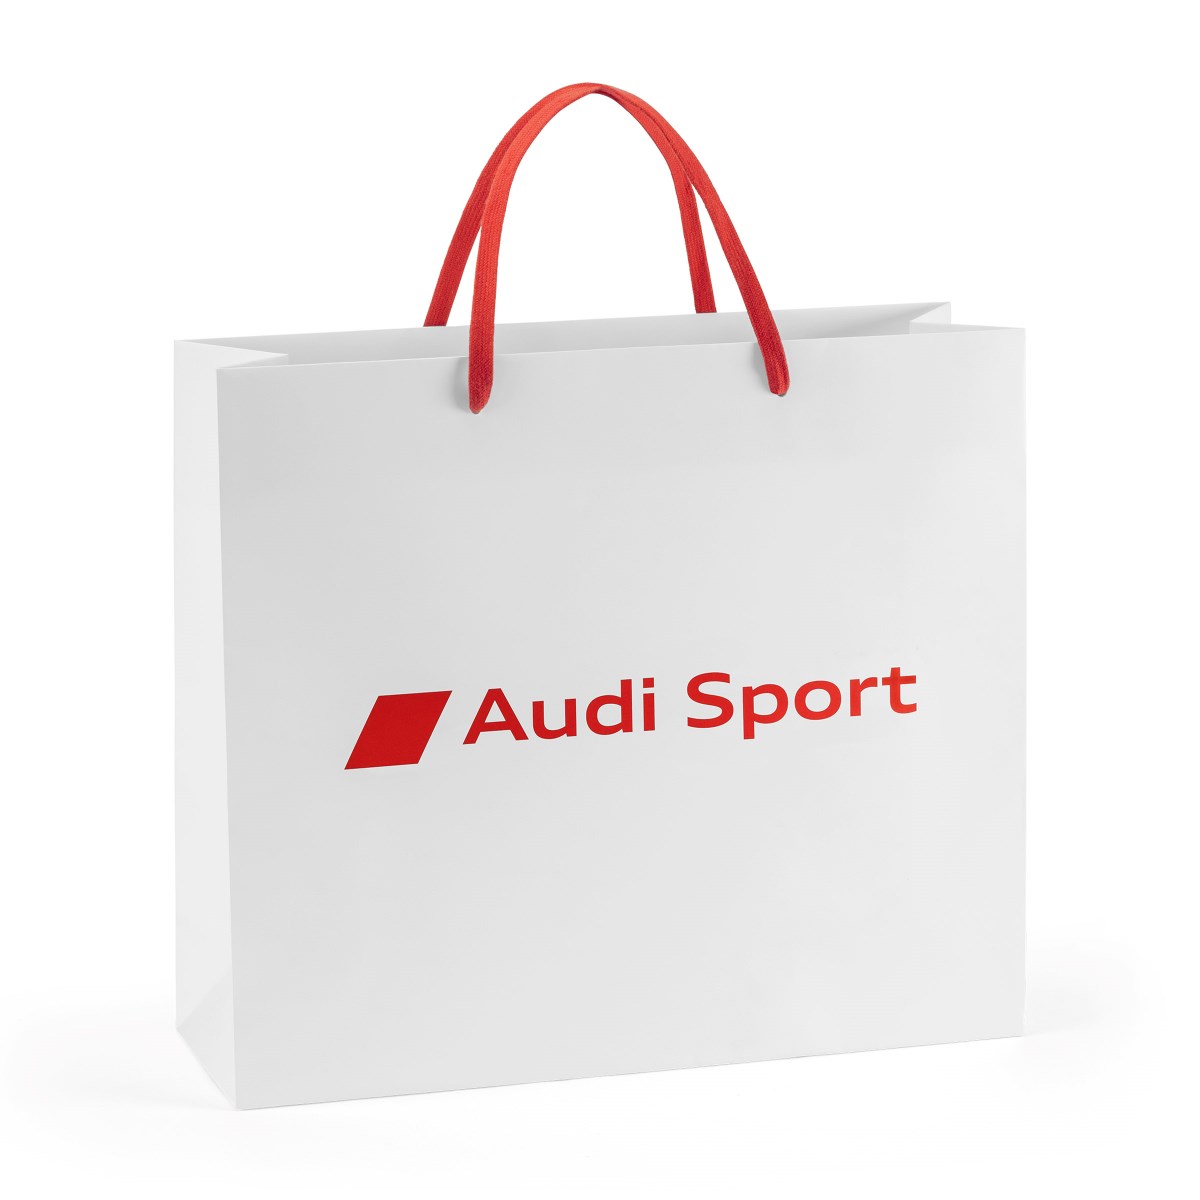 Original Audi Sport Tragetasche Papier Geschenktüte weiß/rot